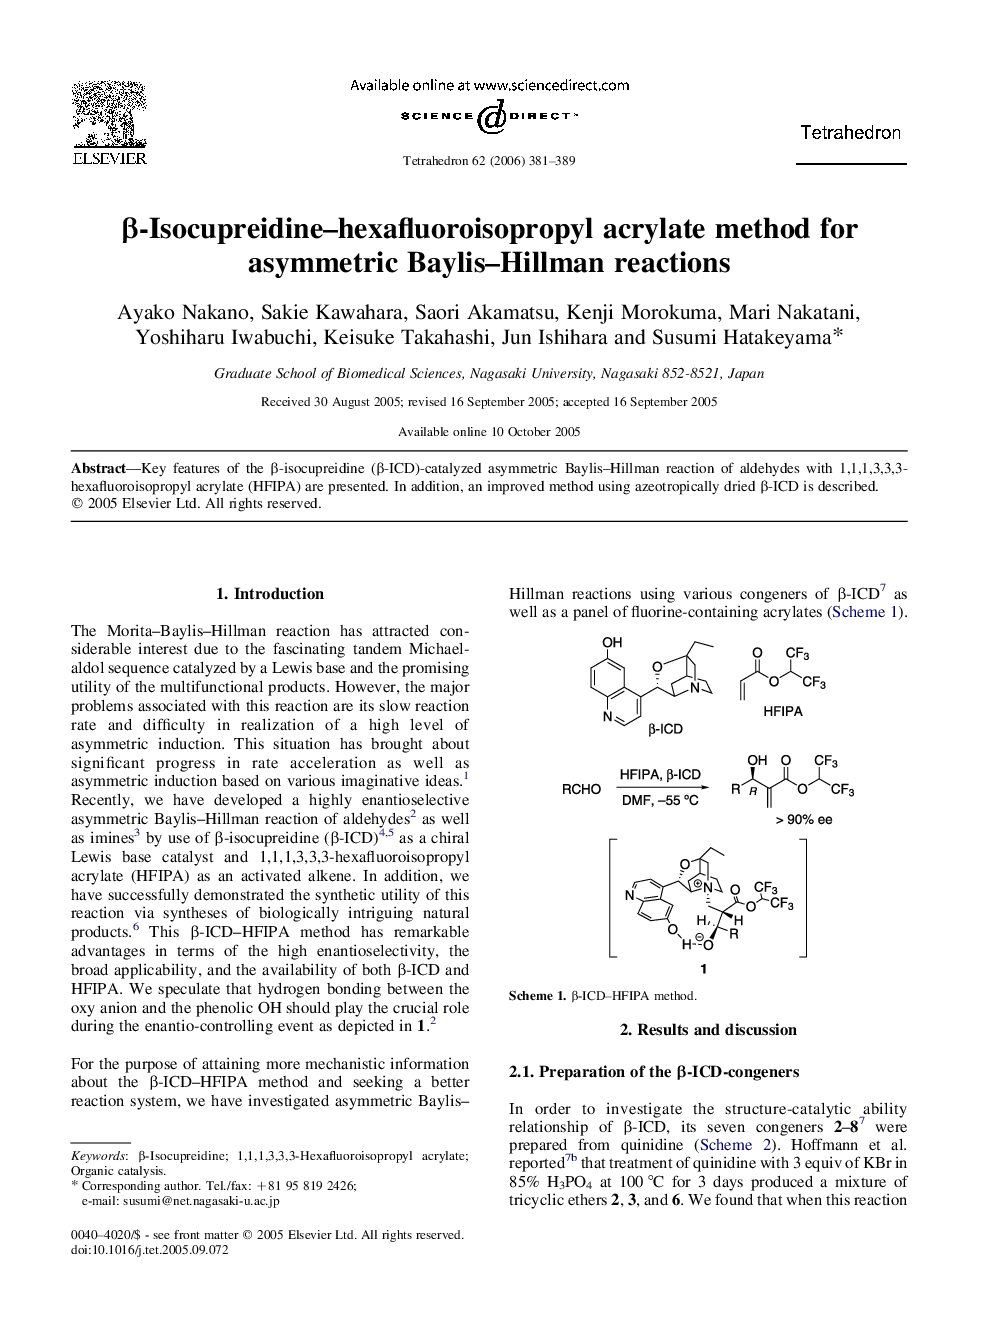 Î²-Isocupreidine-hexafluoroisopropyl acrylate method for asymmetric Baylis-Hillman reactions